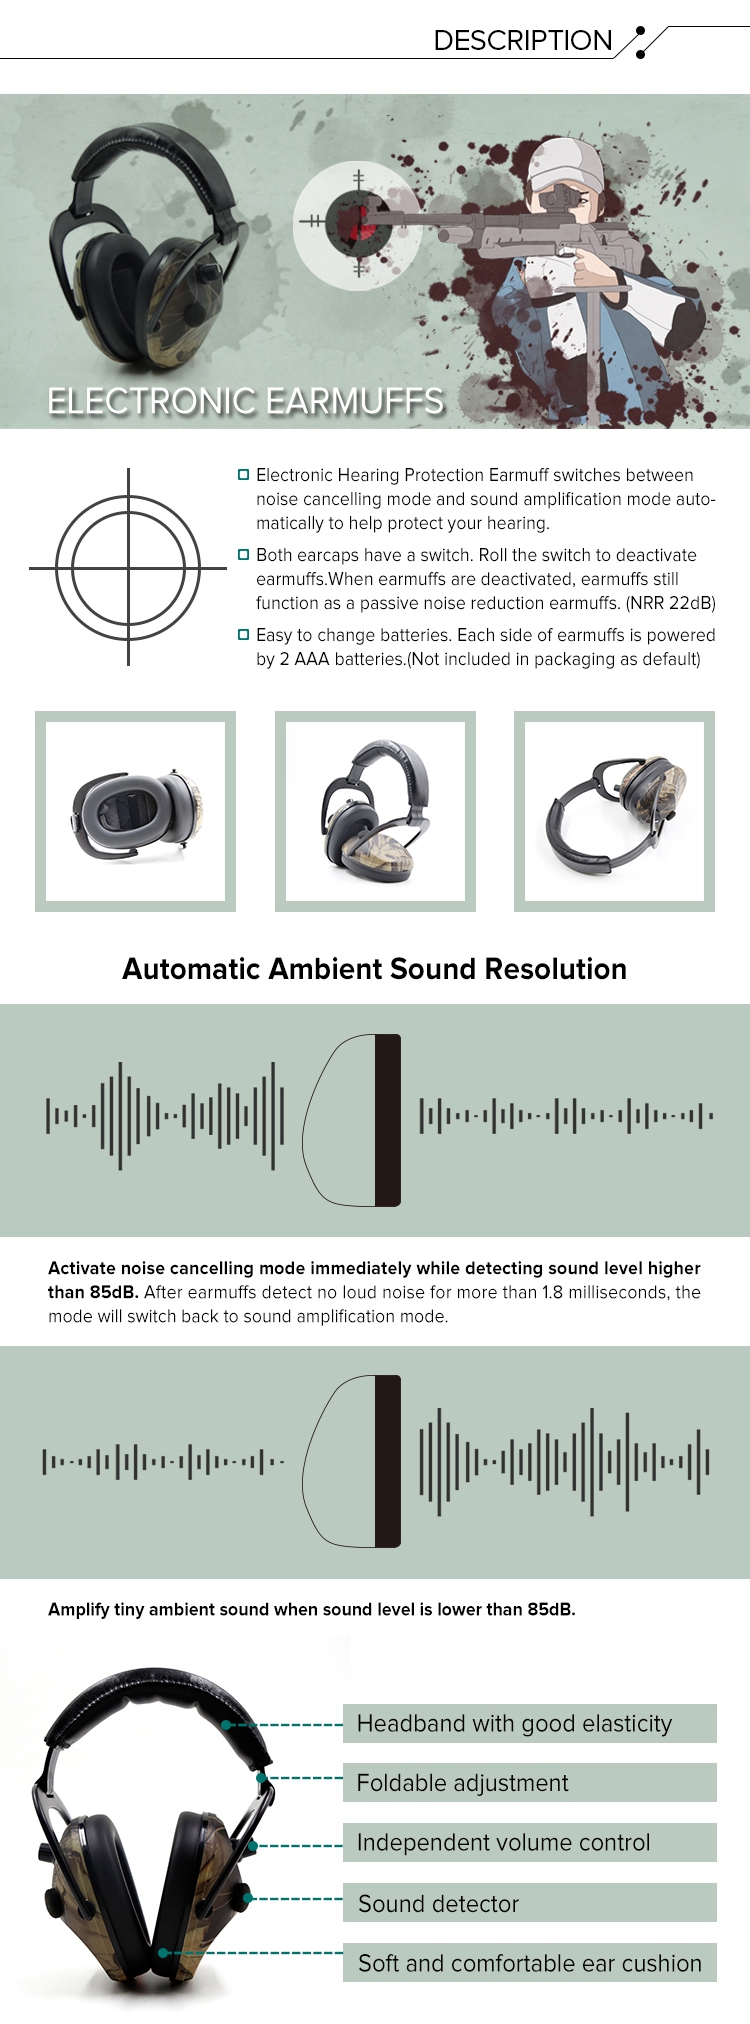 SA-9-2 Electronic Active Noise Isolation Ear Muffs for Shooting description